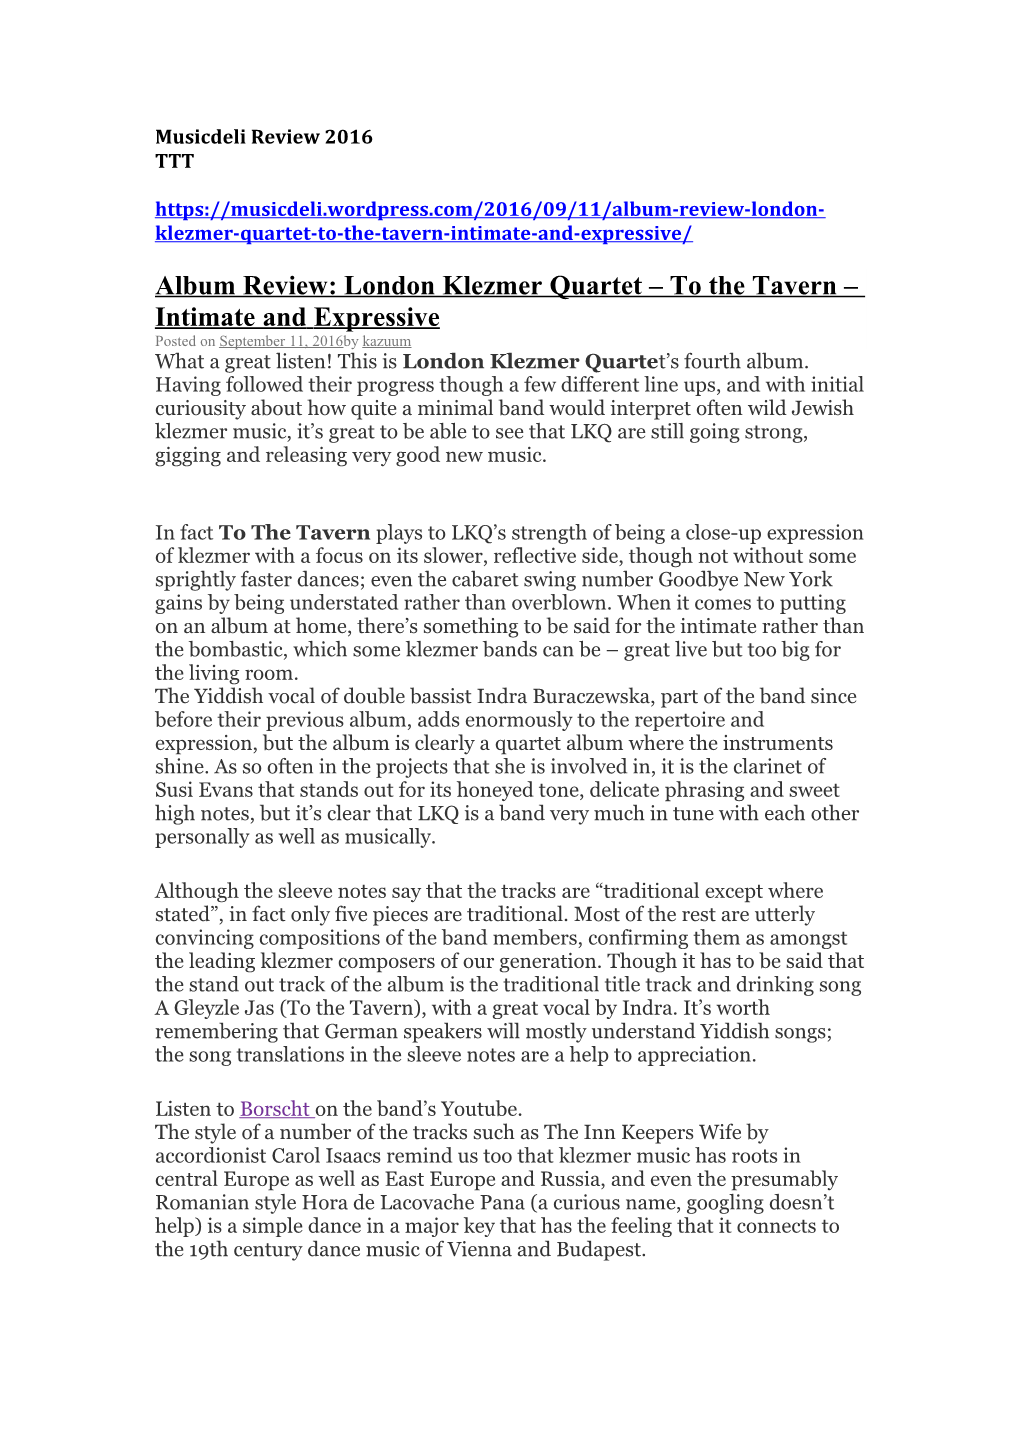 Album Review: London Klezmer Quartet to the Tavern Intimate Andexpressive